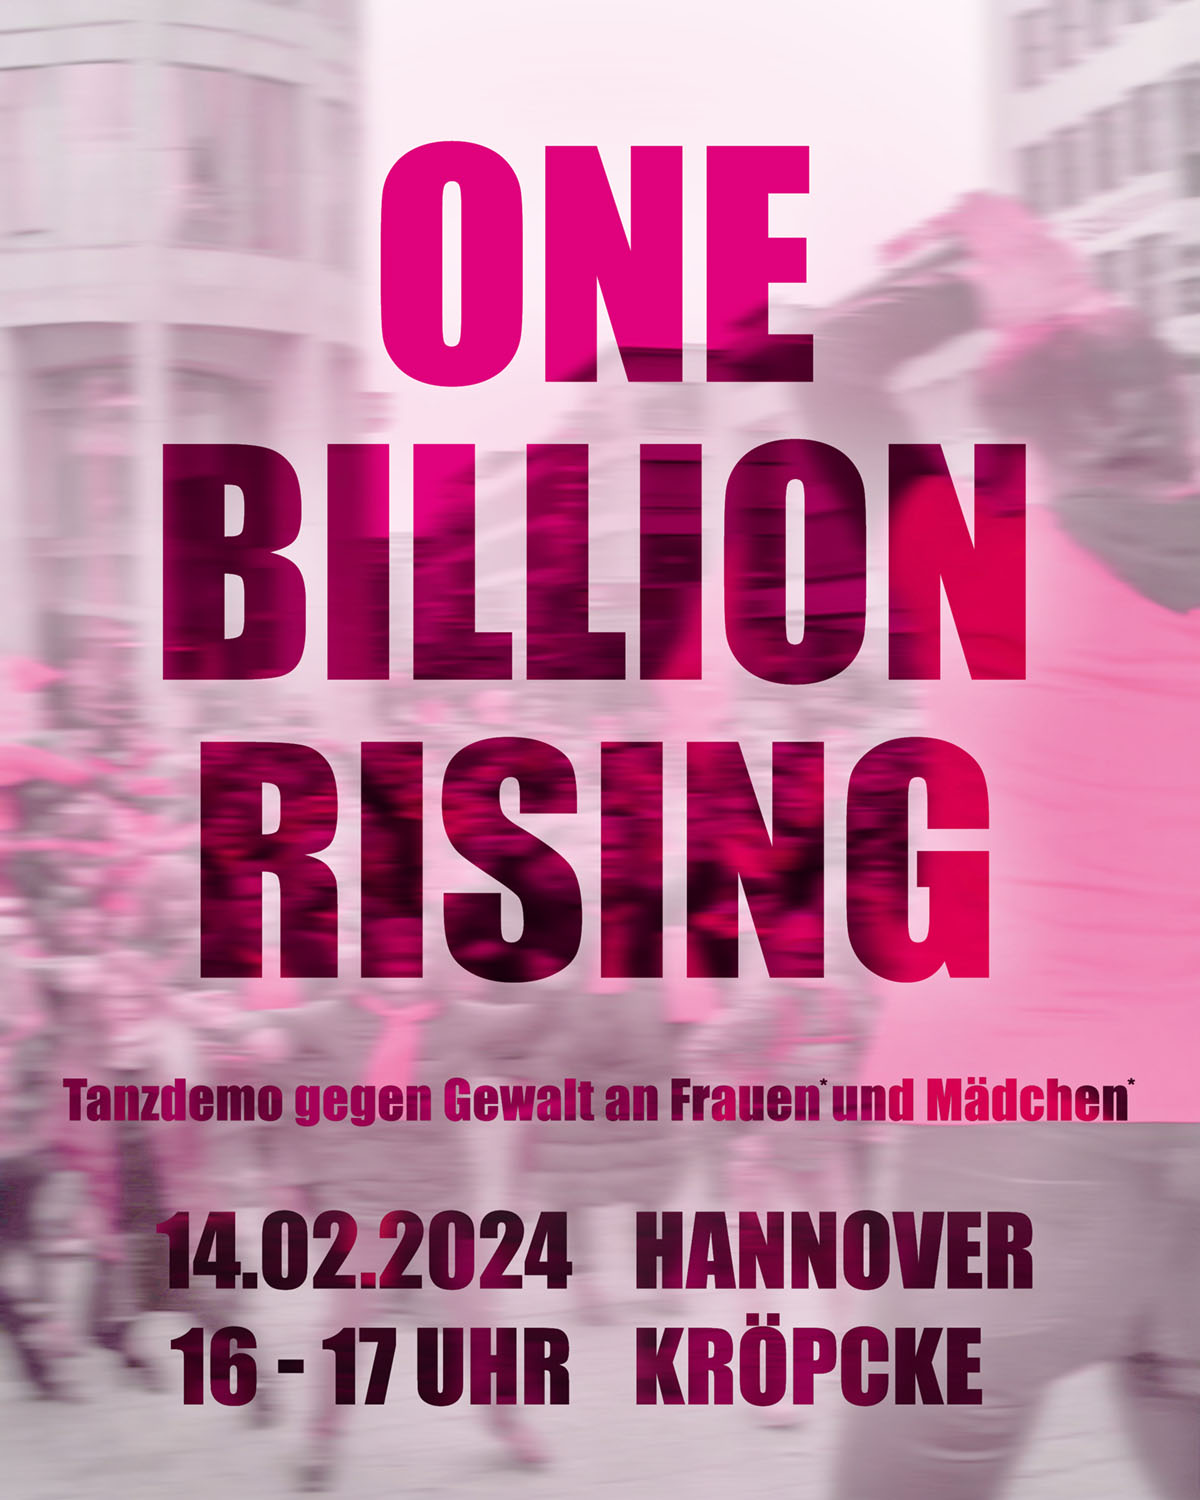 One Billion Rising Hannover 2024